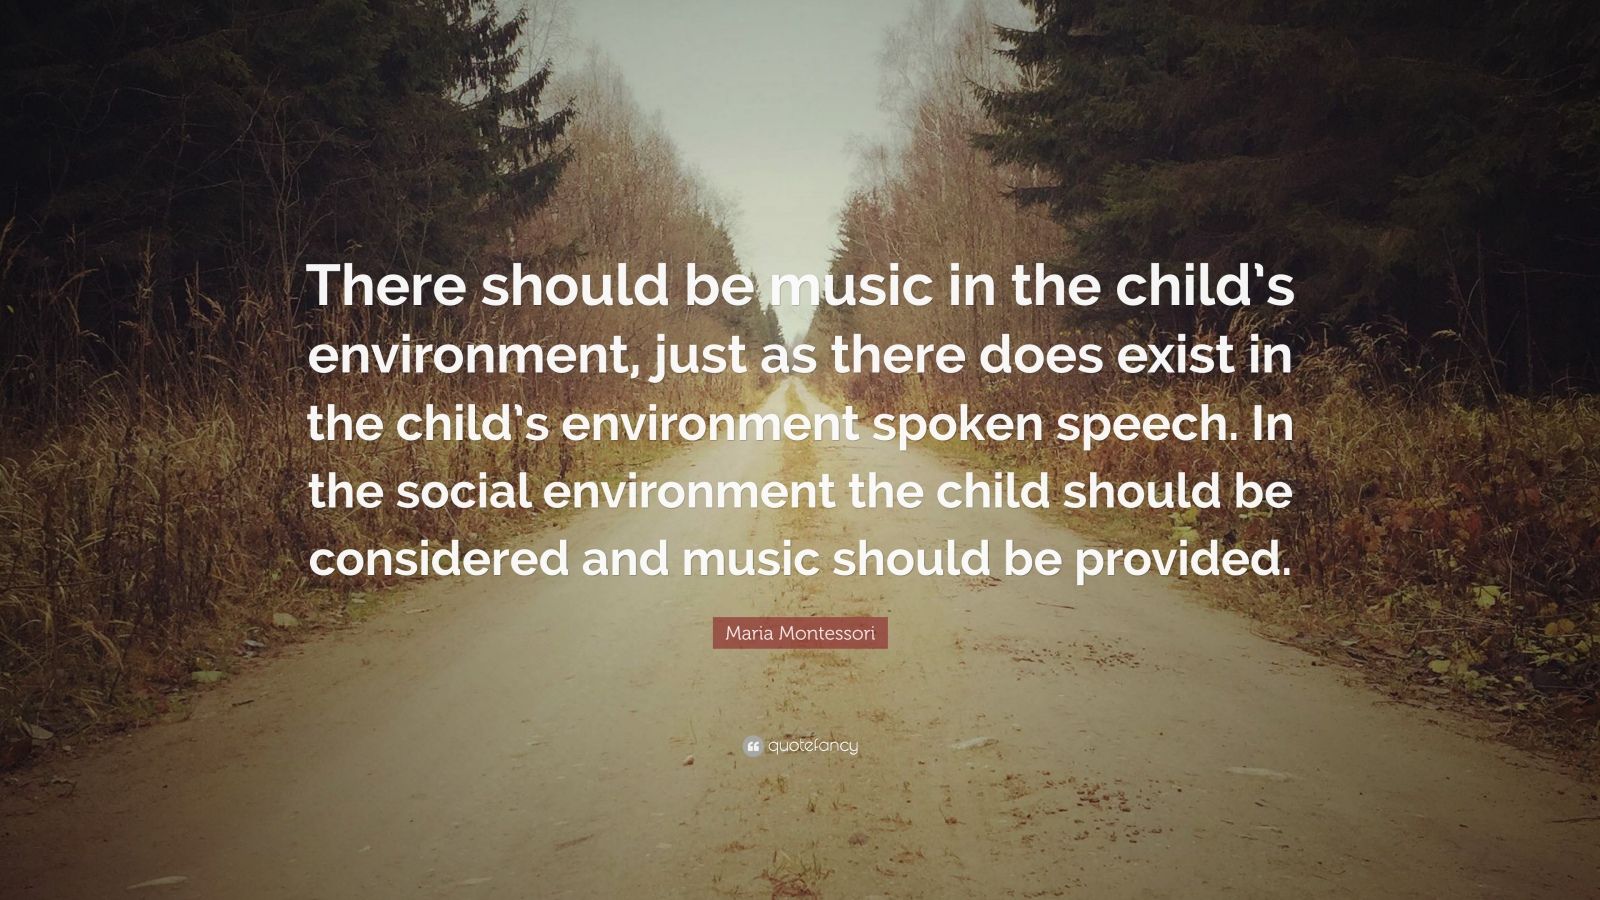 Maria Montessori Quote: “There should be music in the child’s